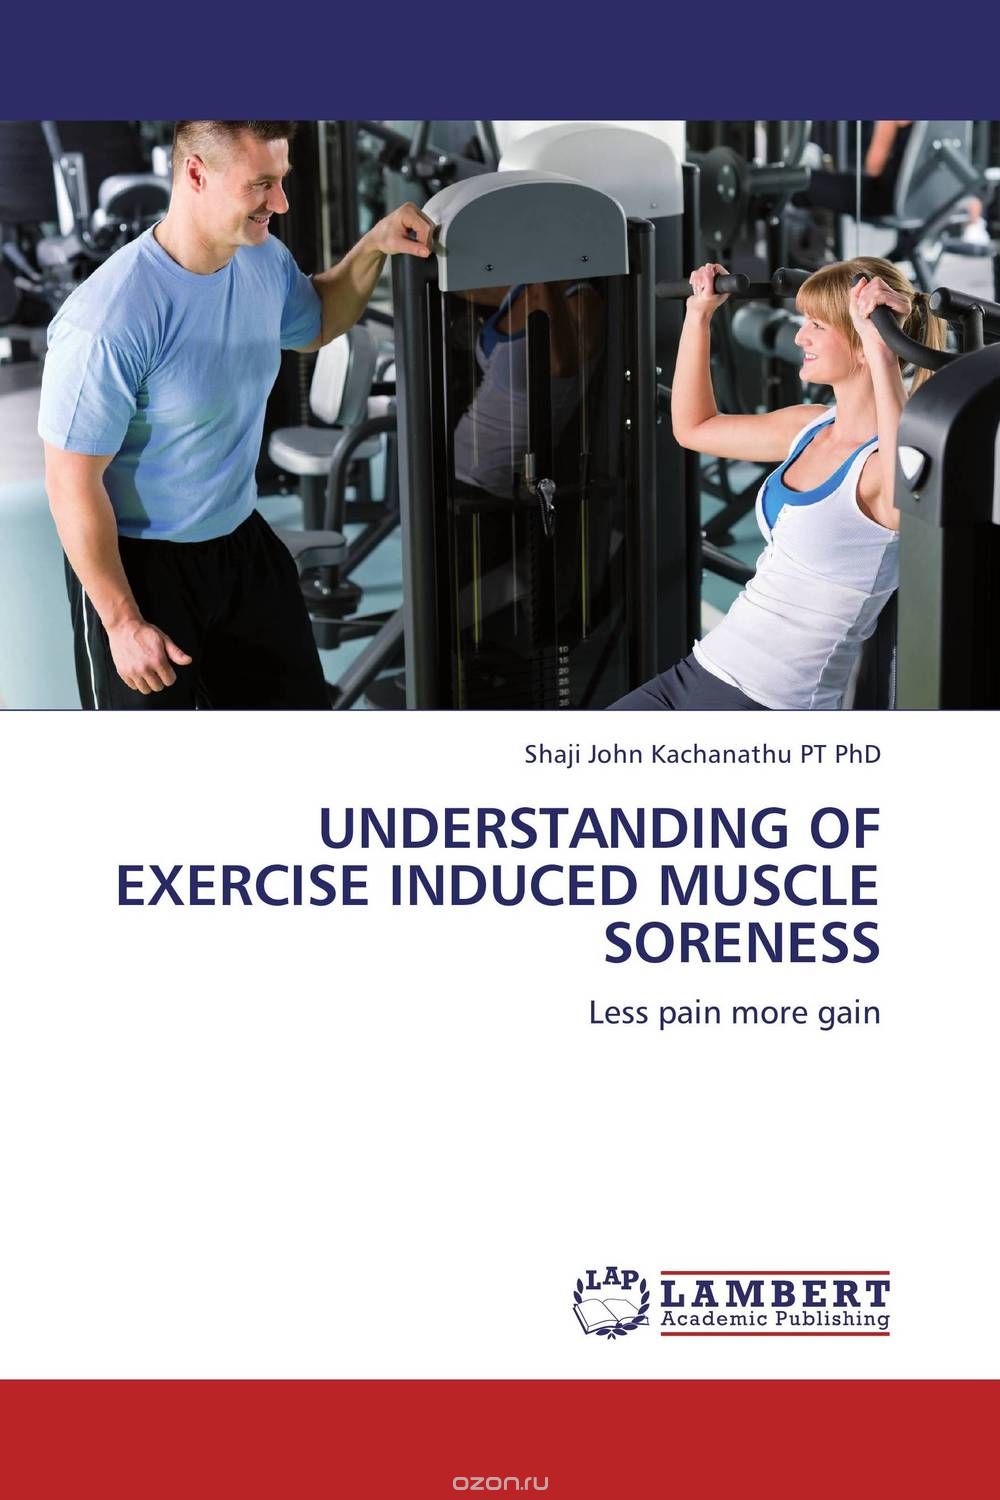 Скачать книгу "Understanding of exercise induced muscle soreness"